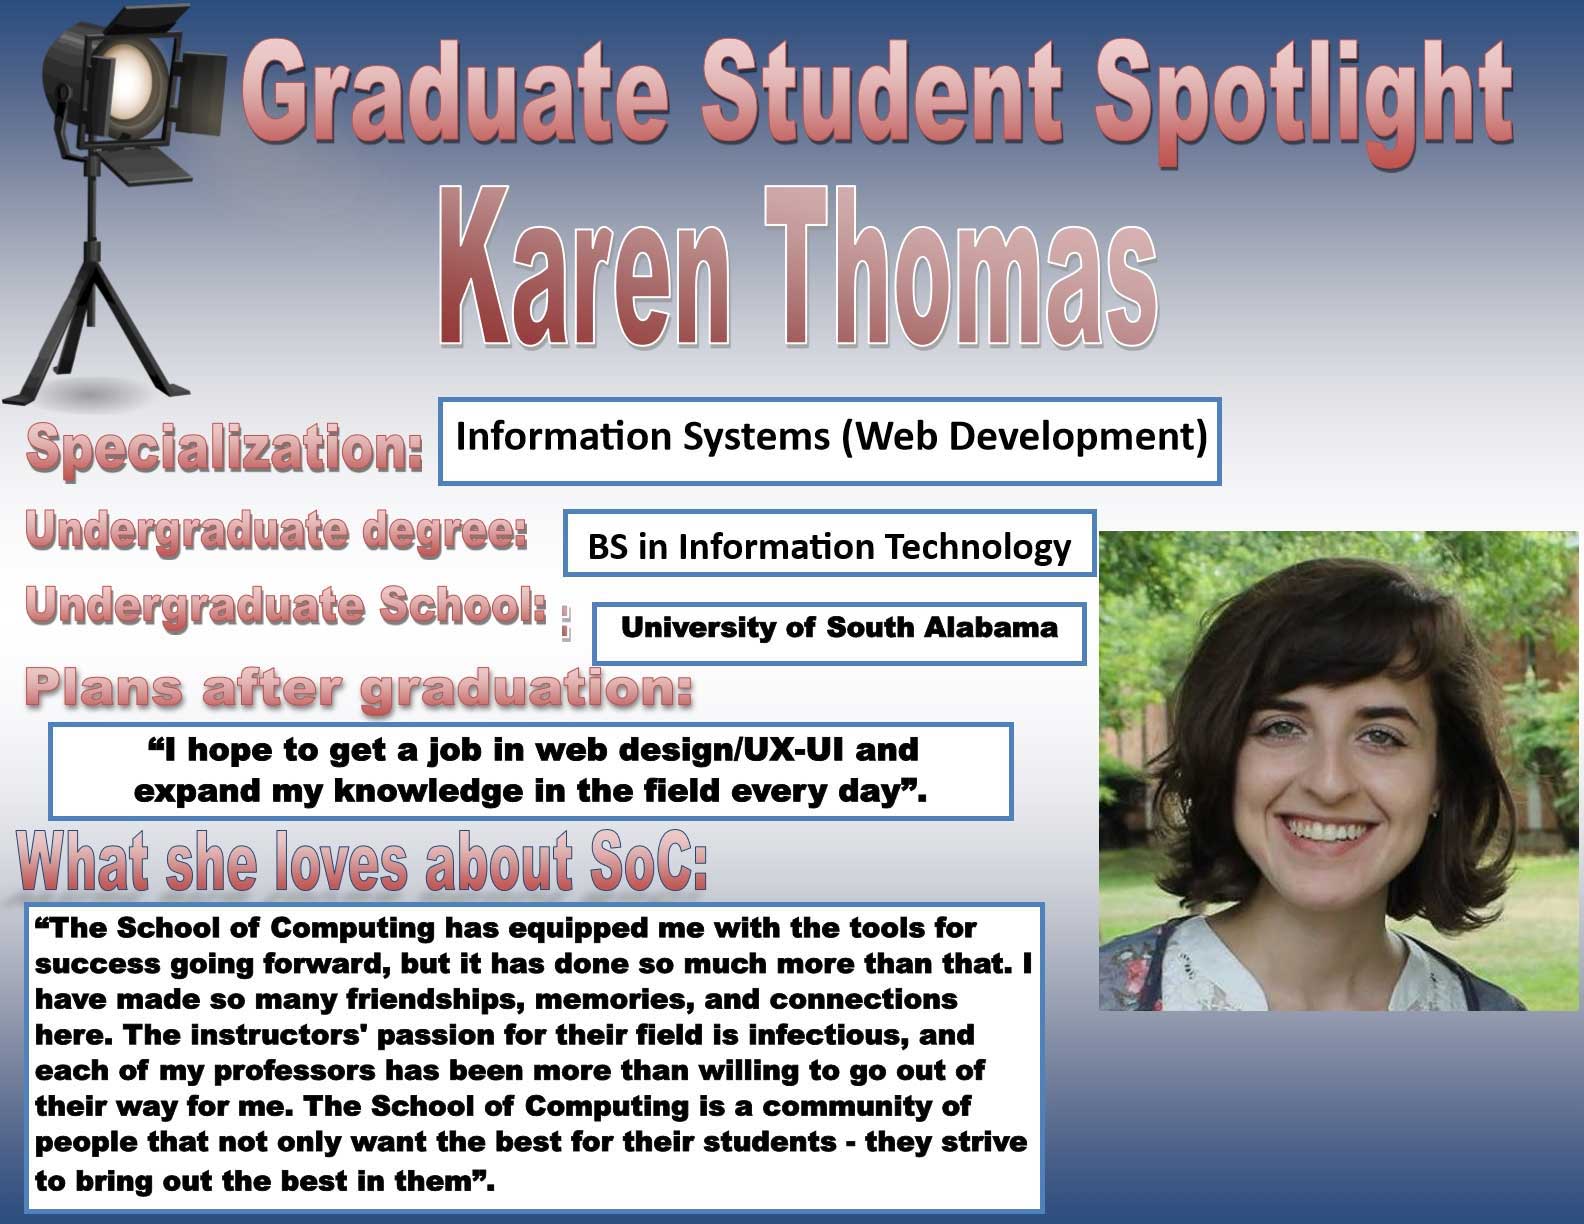 Graduate Student Spotlight: Karen Thomas